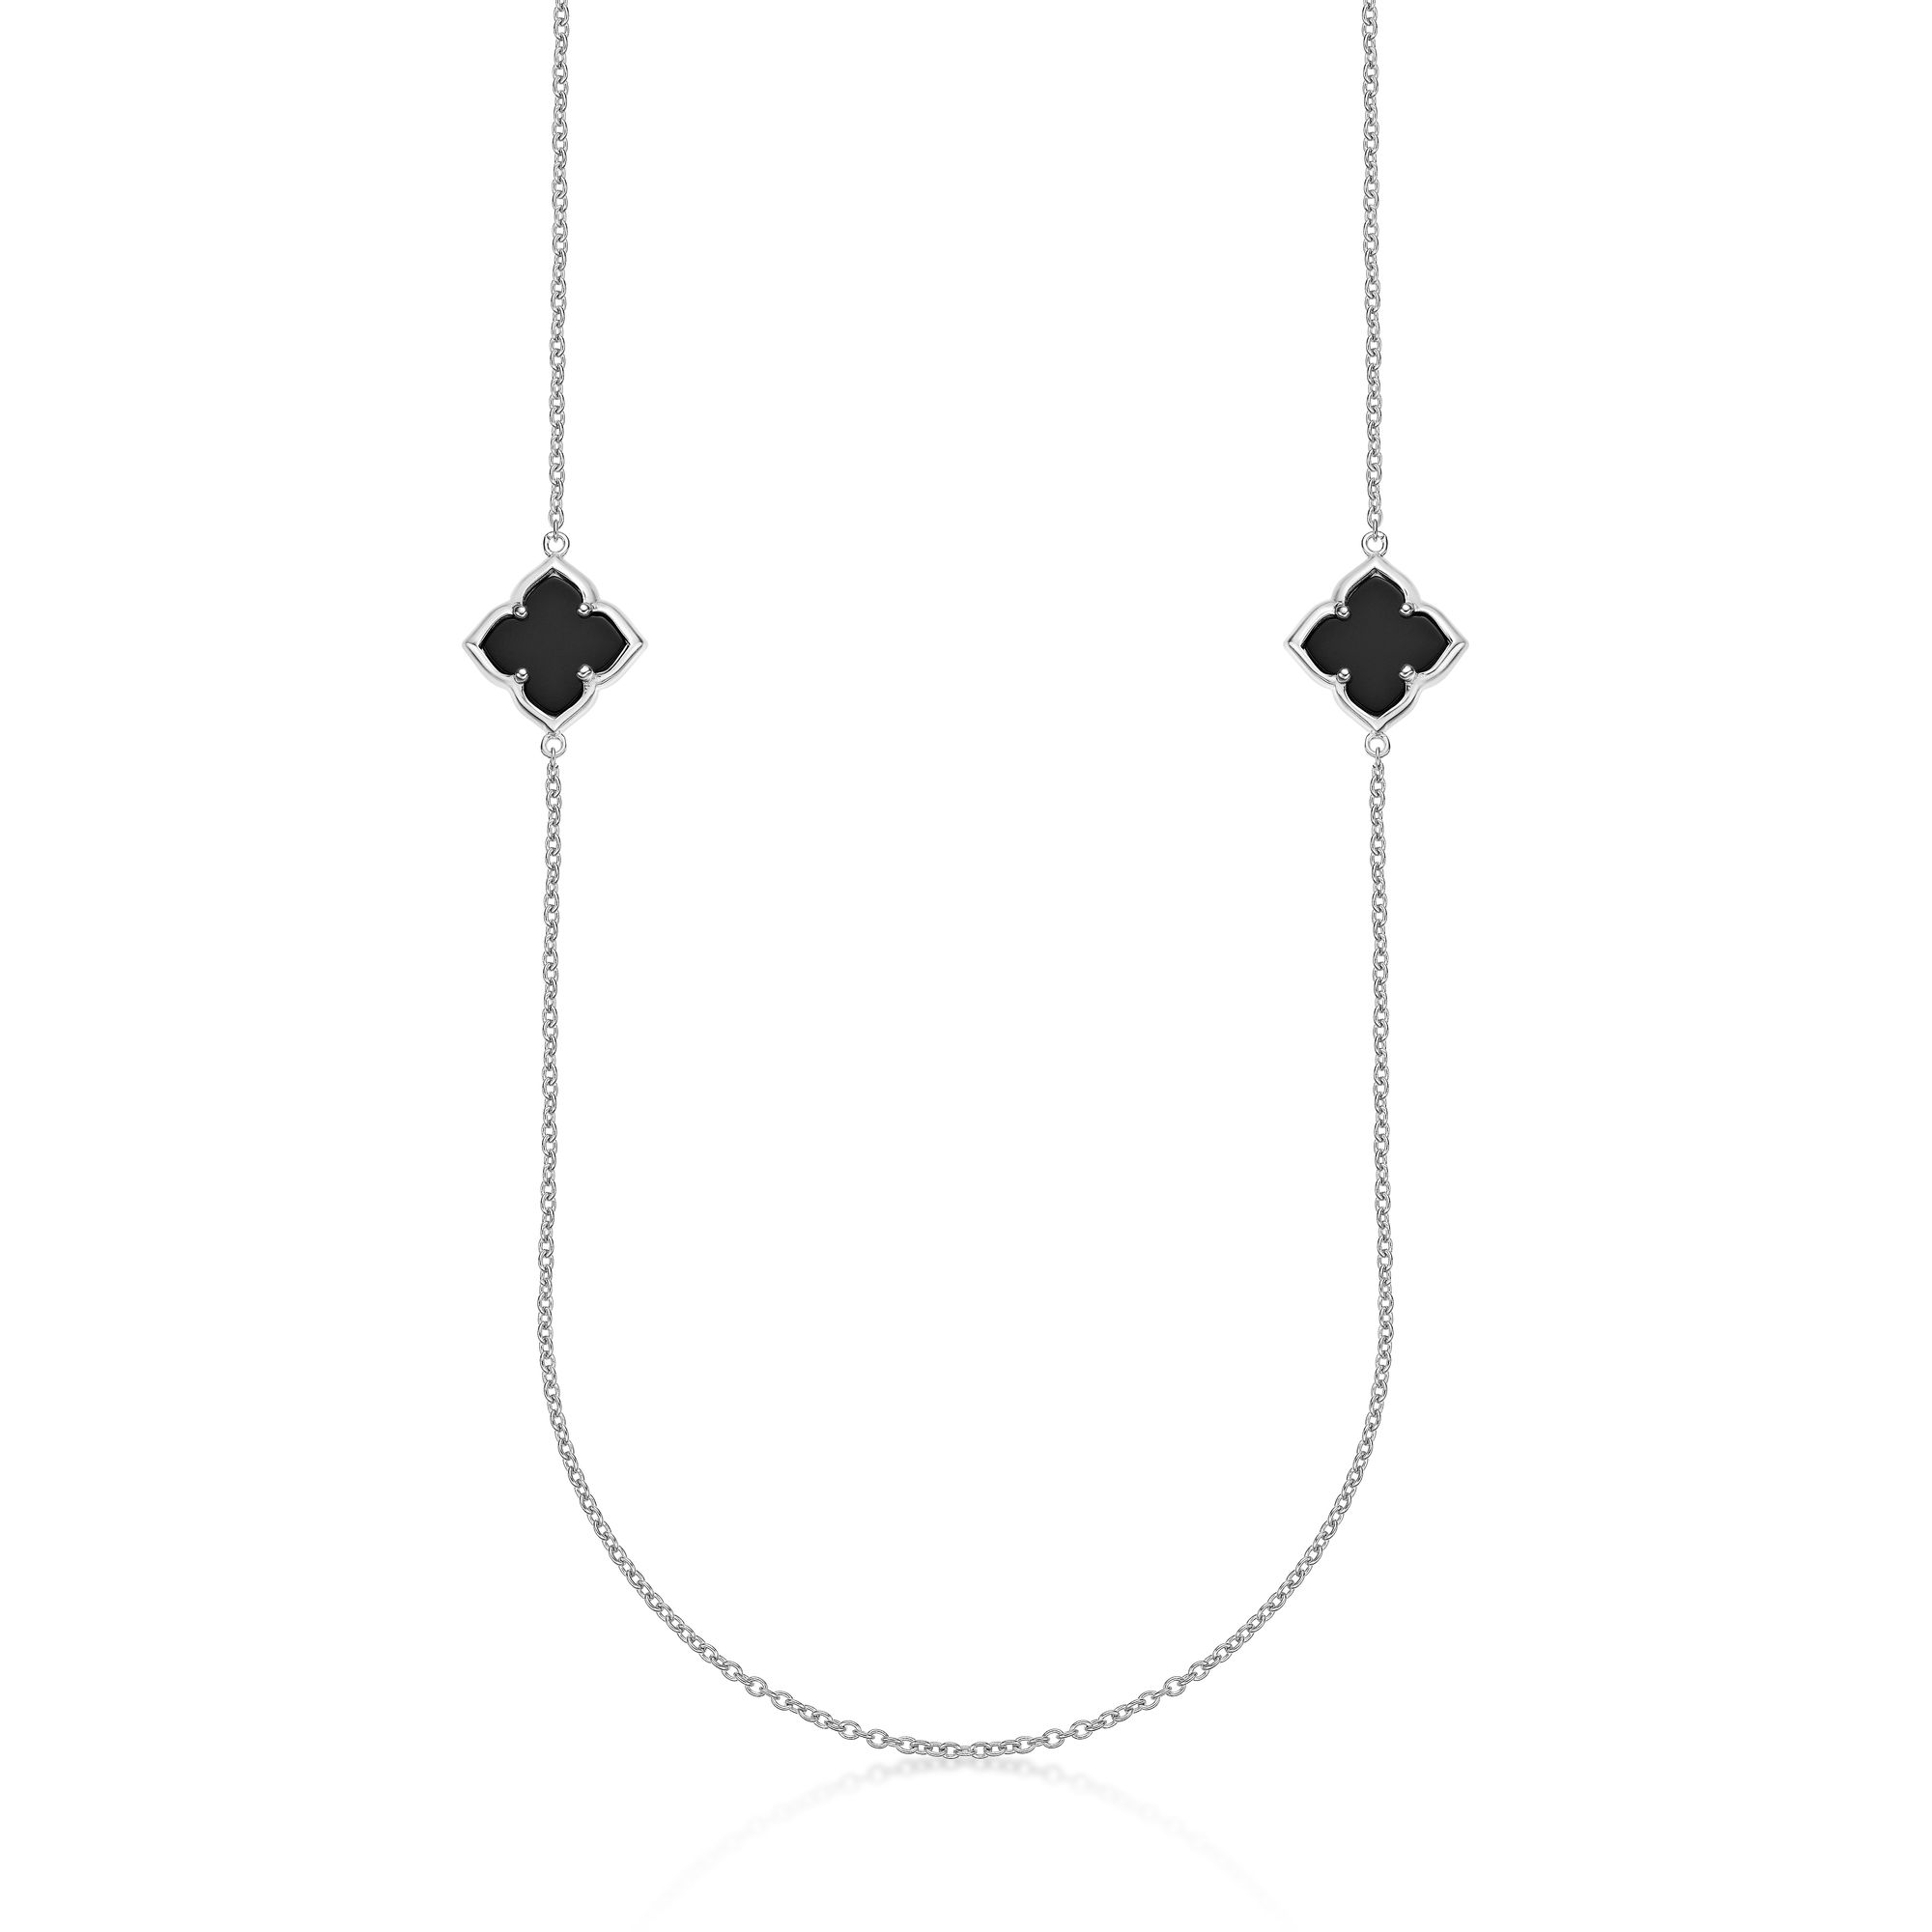 52190-necklace-flora-sterling-silver-52190-2-2.jpg